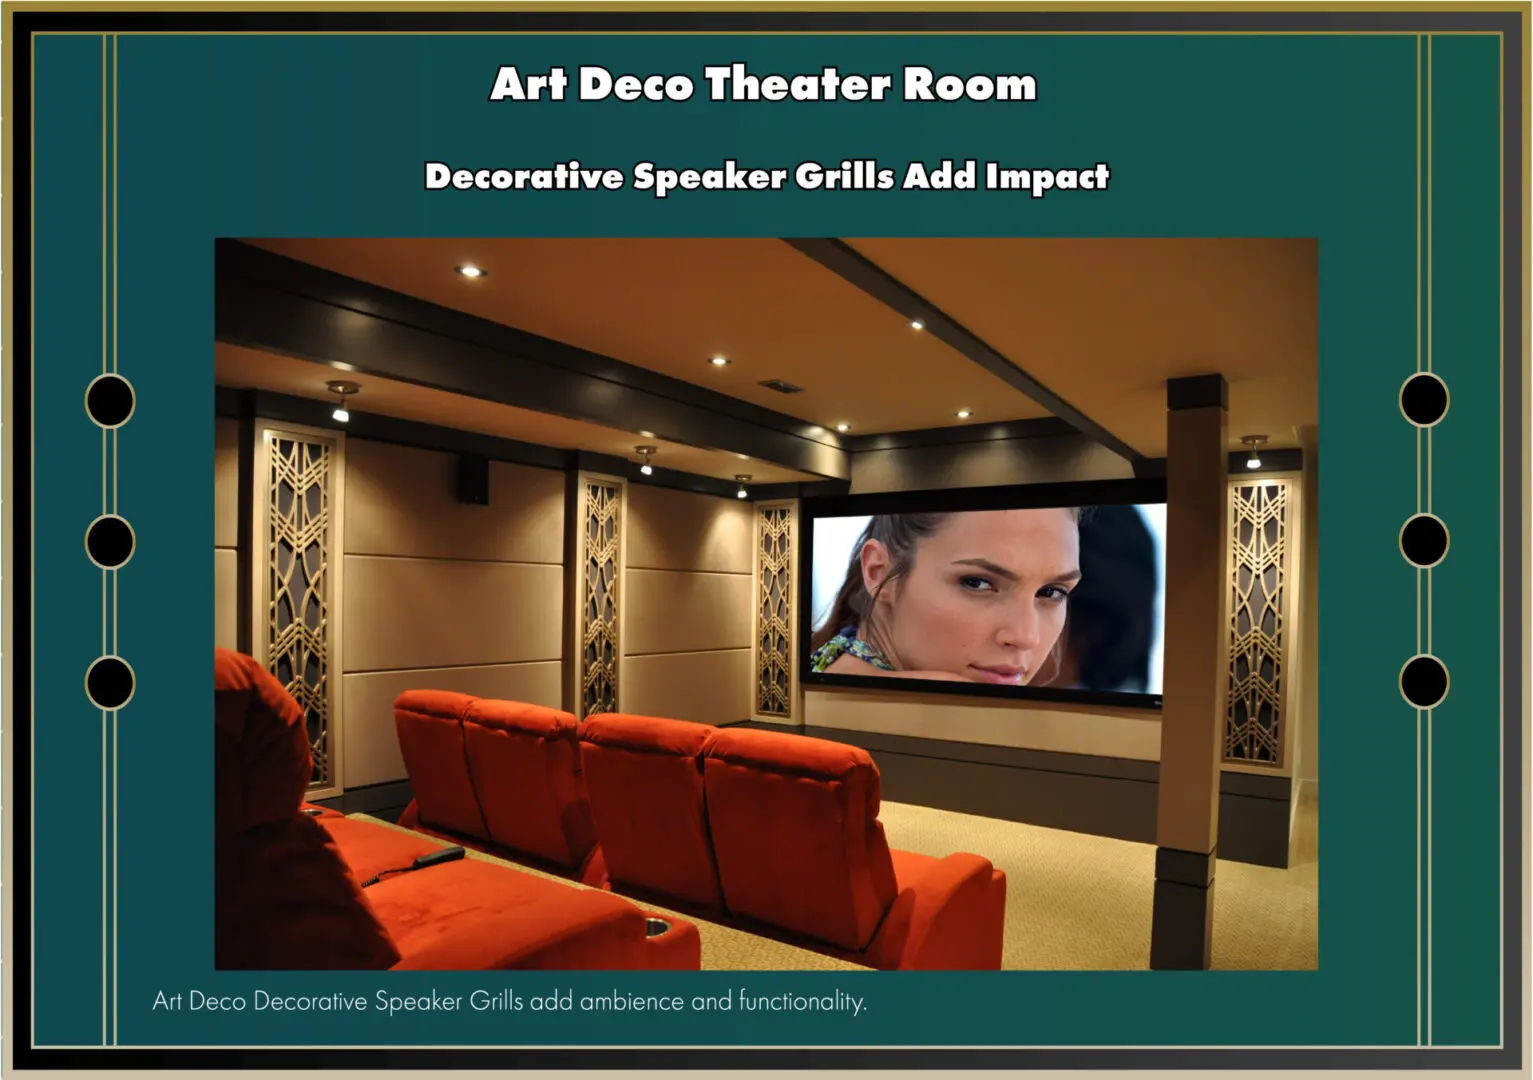 Art Deco Theater Room with Decorative Speaker Grills